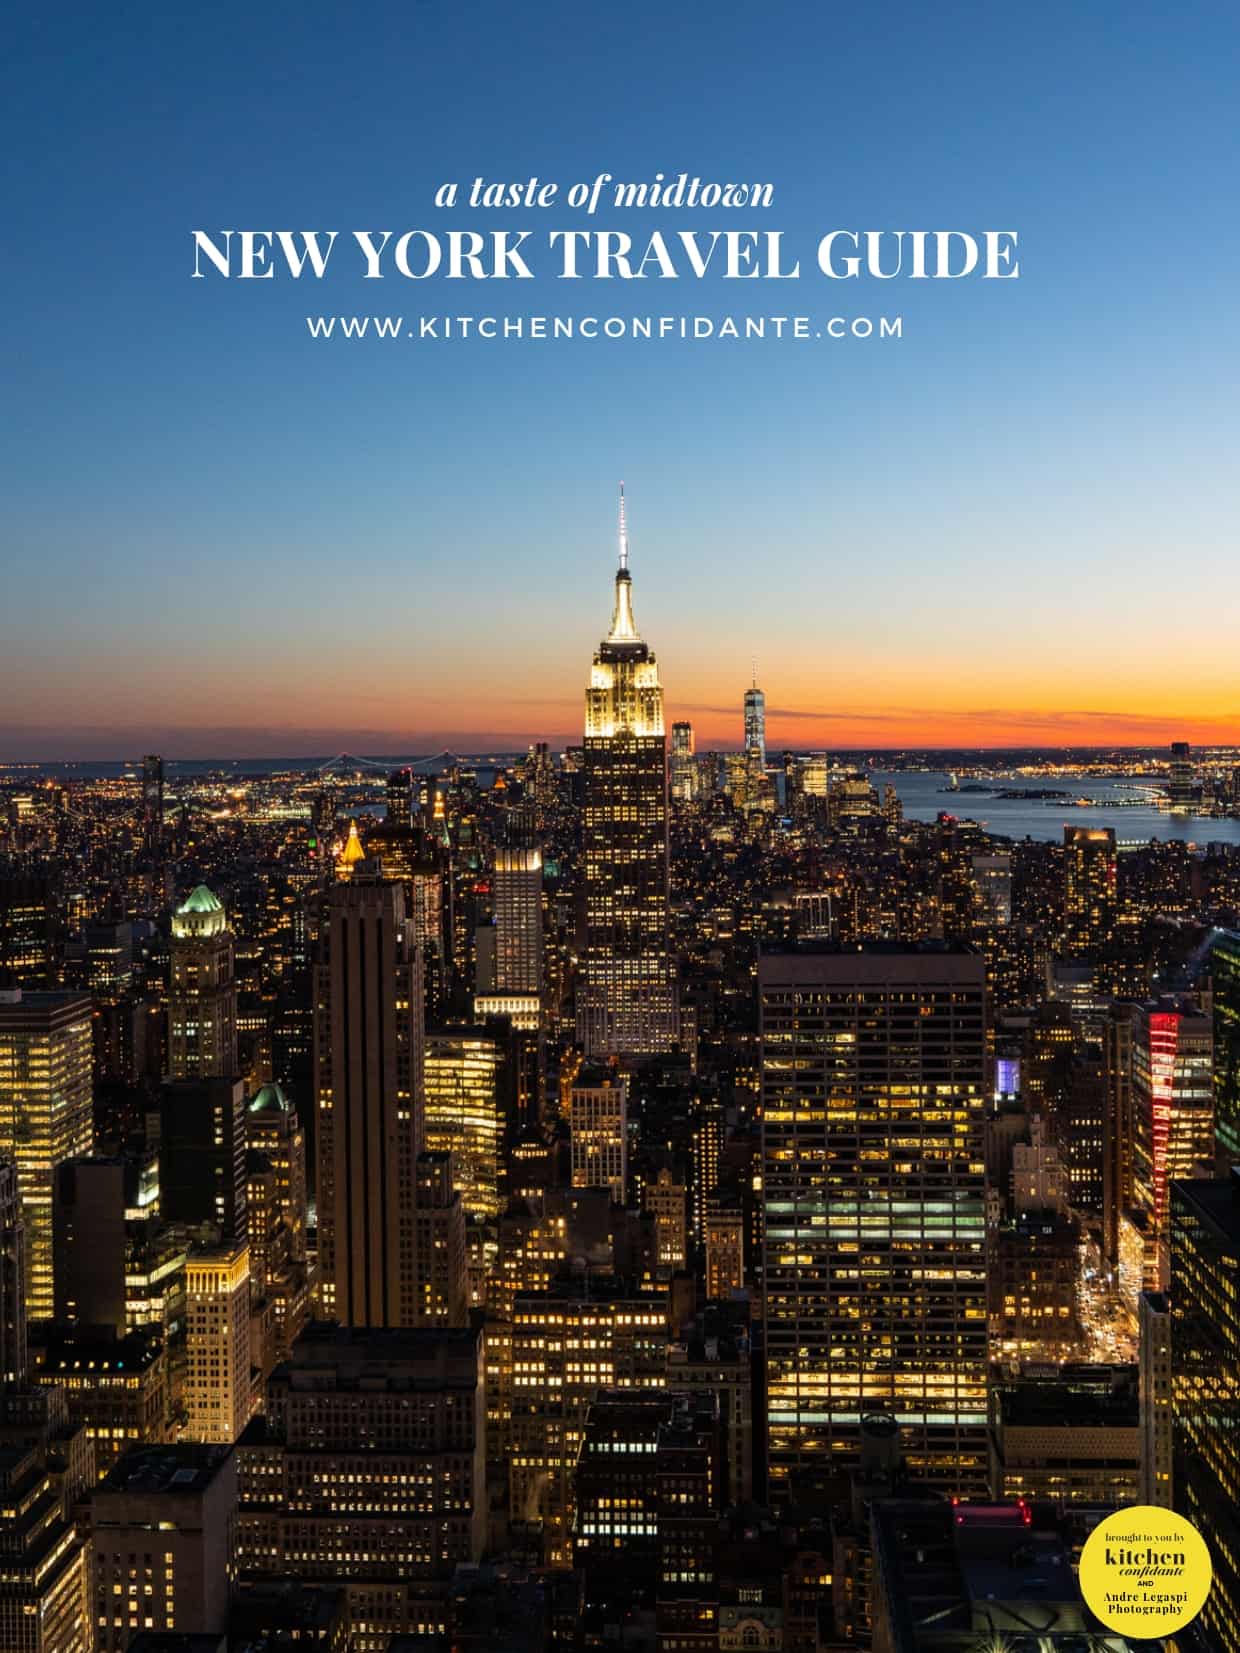 New York Travel Guide: A Taste of Midtown - Kitchen Confidante®